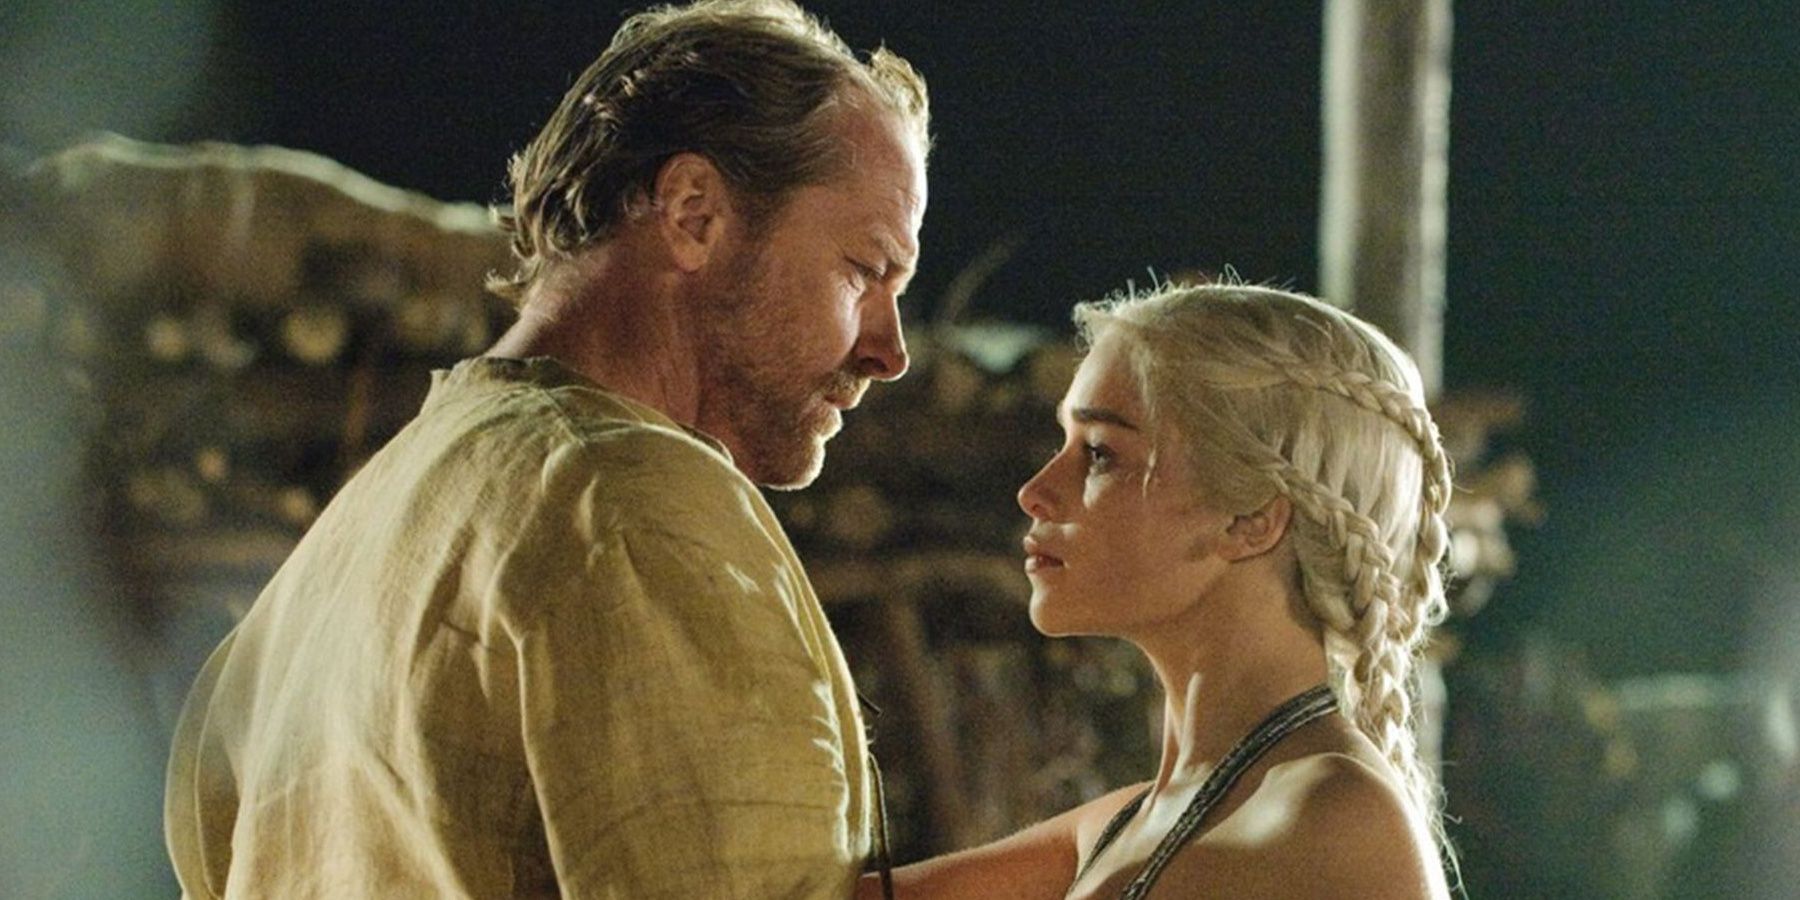 Game of Thrones 5 Times We Felt Bad For Jorah Mormont (& 5 Times We Hated Him)